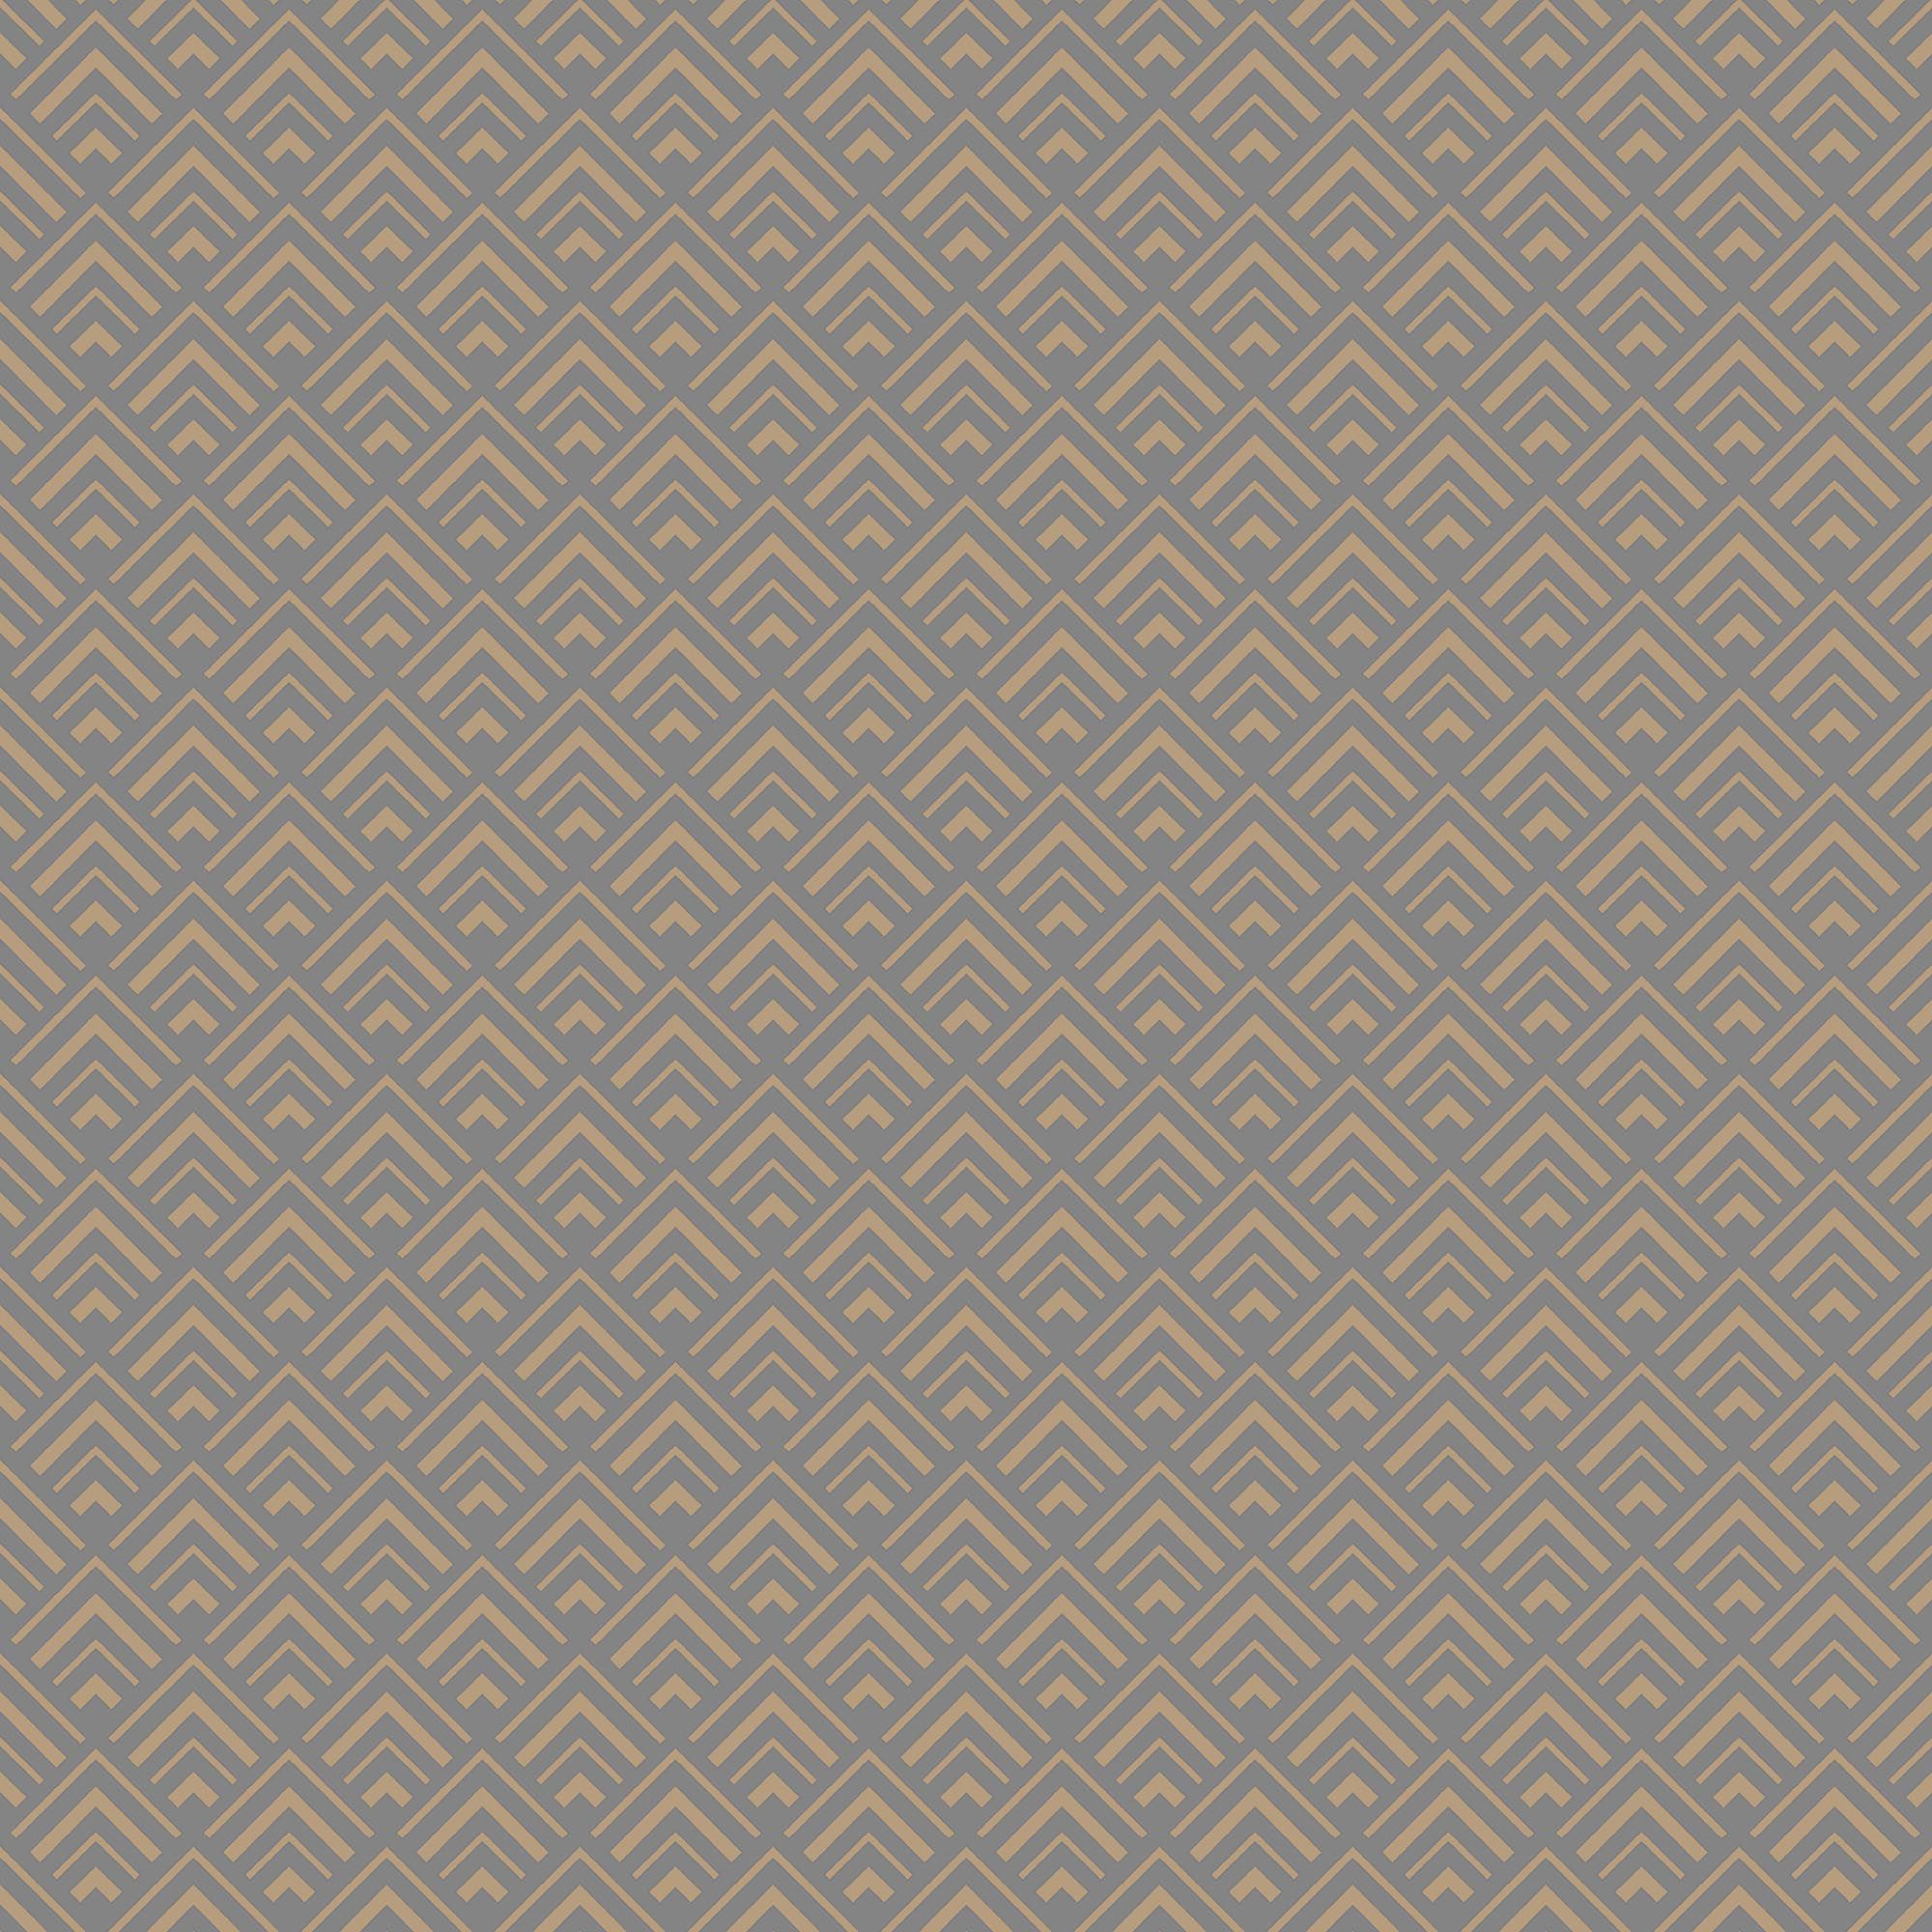 GoodHome Ficus Grey Art deco Gold effect Textured Wallpaper Sample